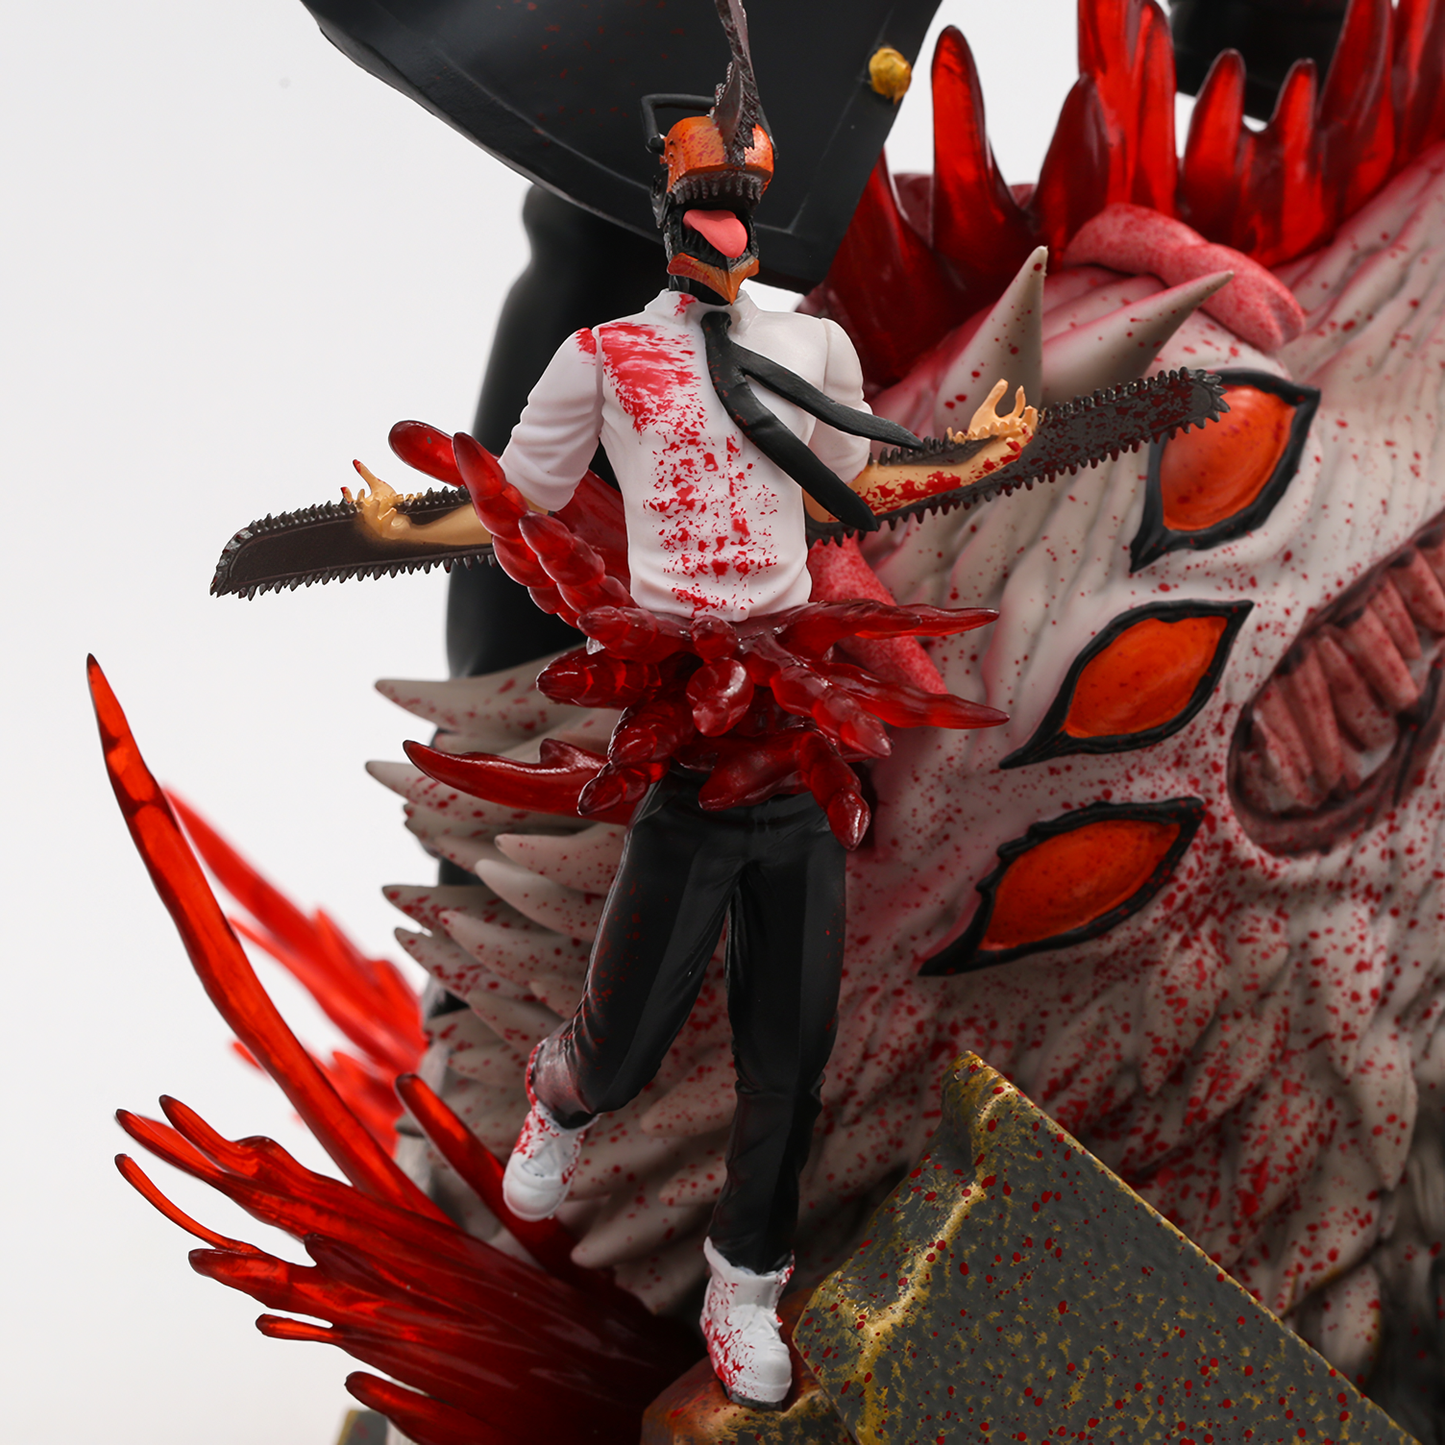 Samurai Sword Man - Chainsaw Man 34CM | PVC Figurine | 3D Painted Model